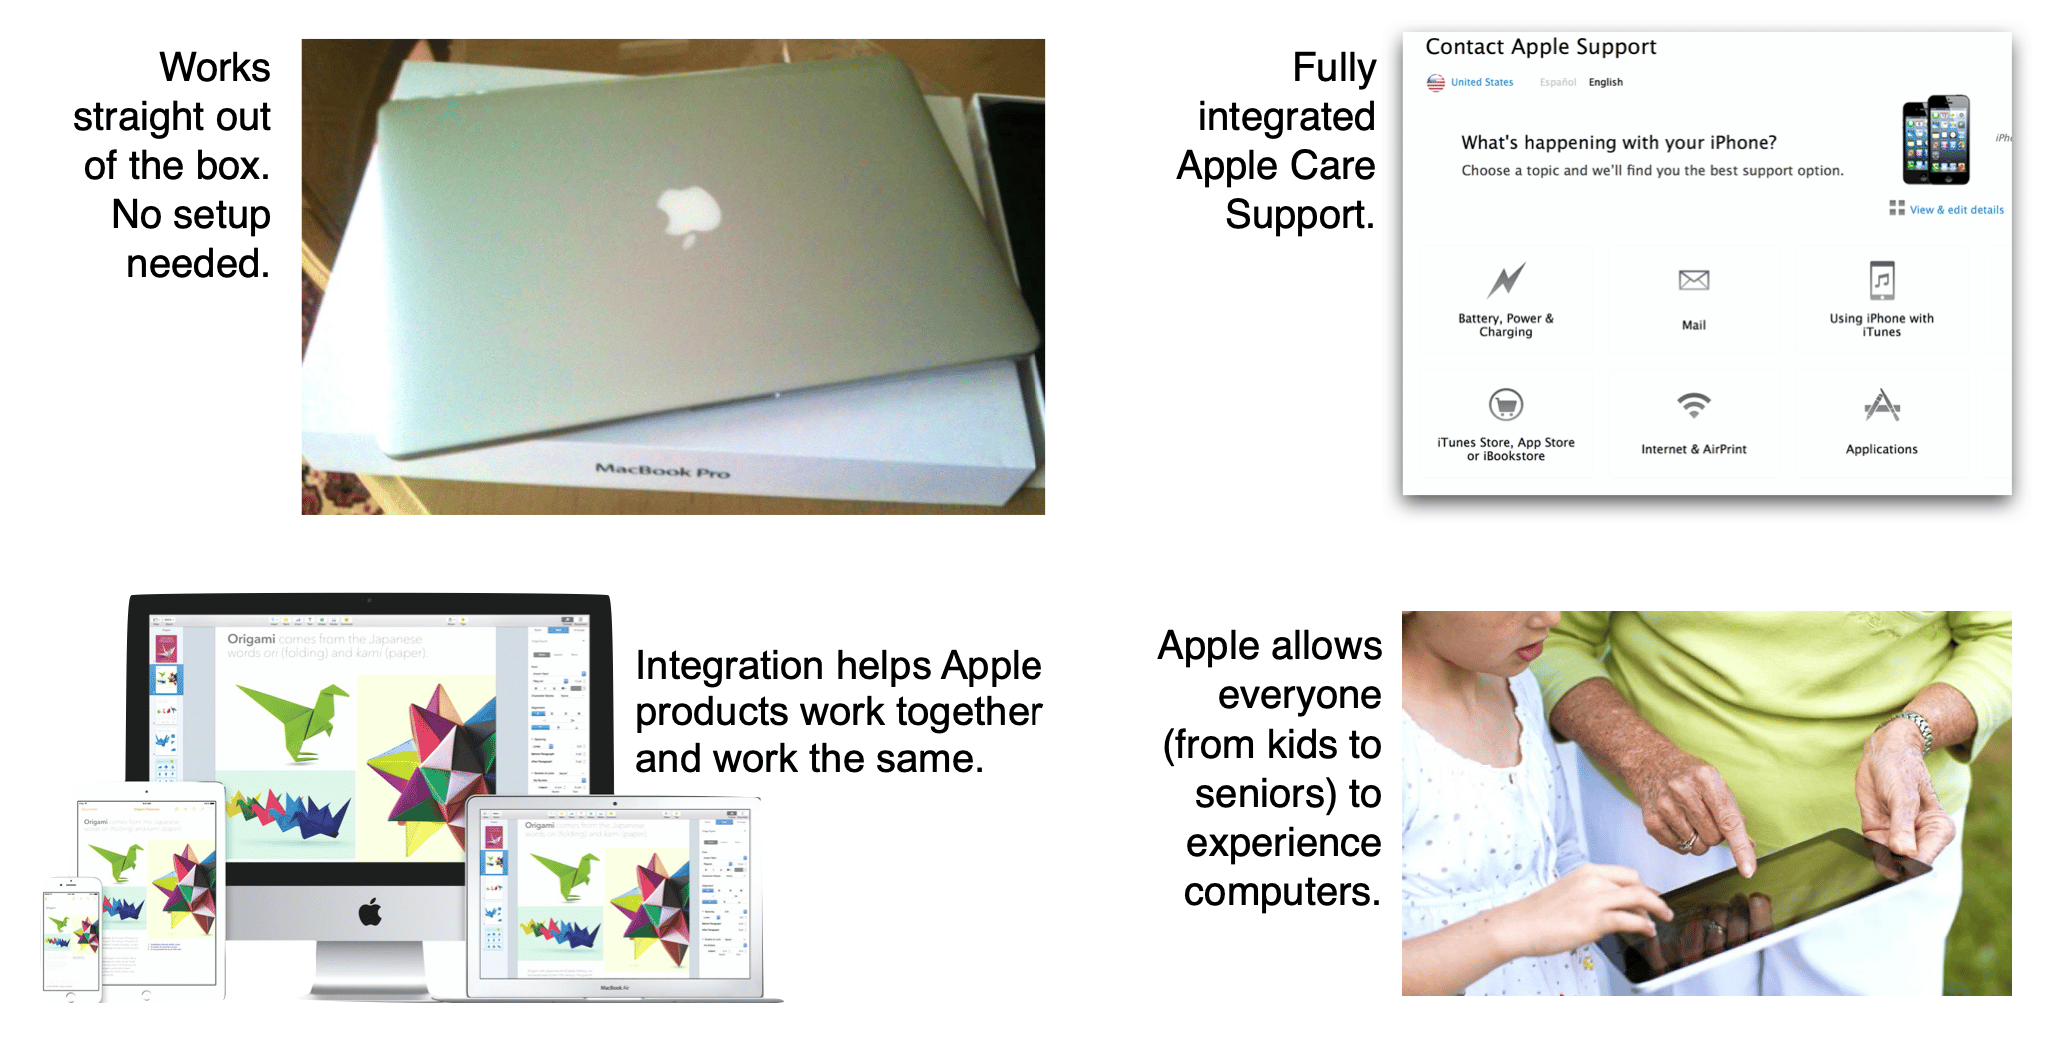 Apple Consumer Experience